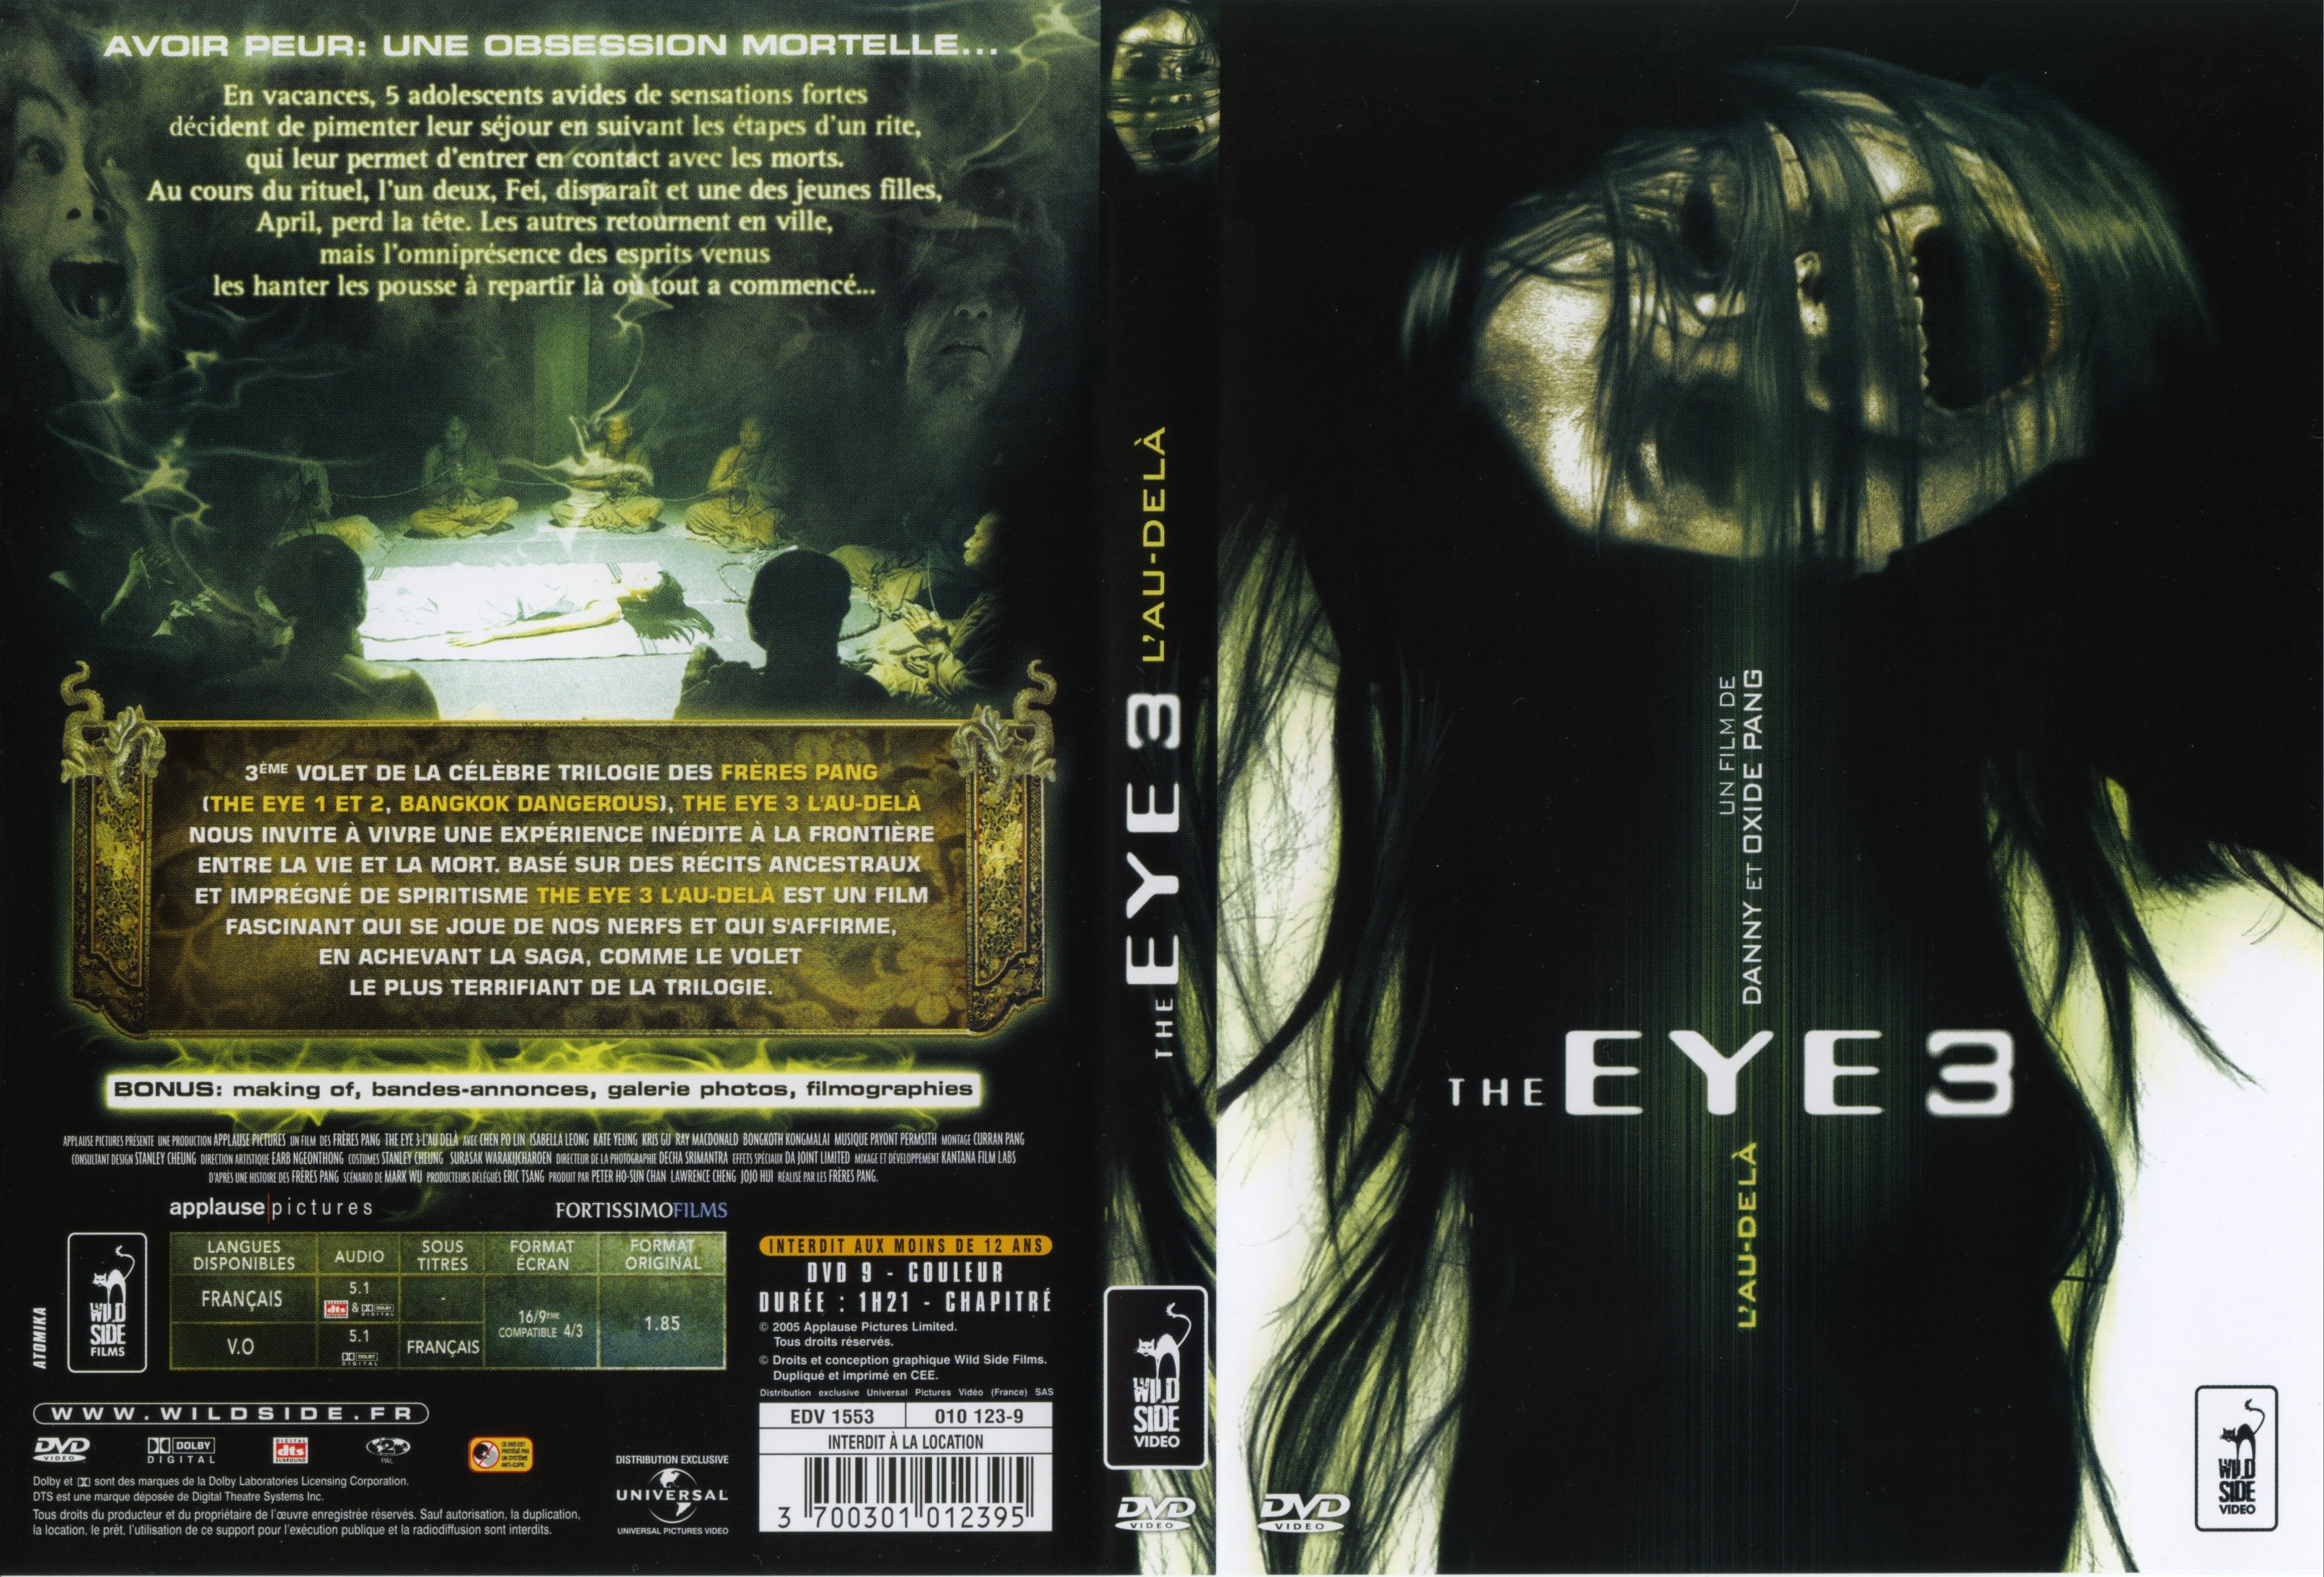 Jaquette DVD The eye 3 v2